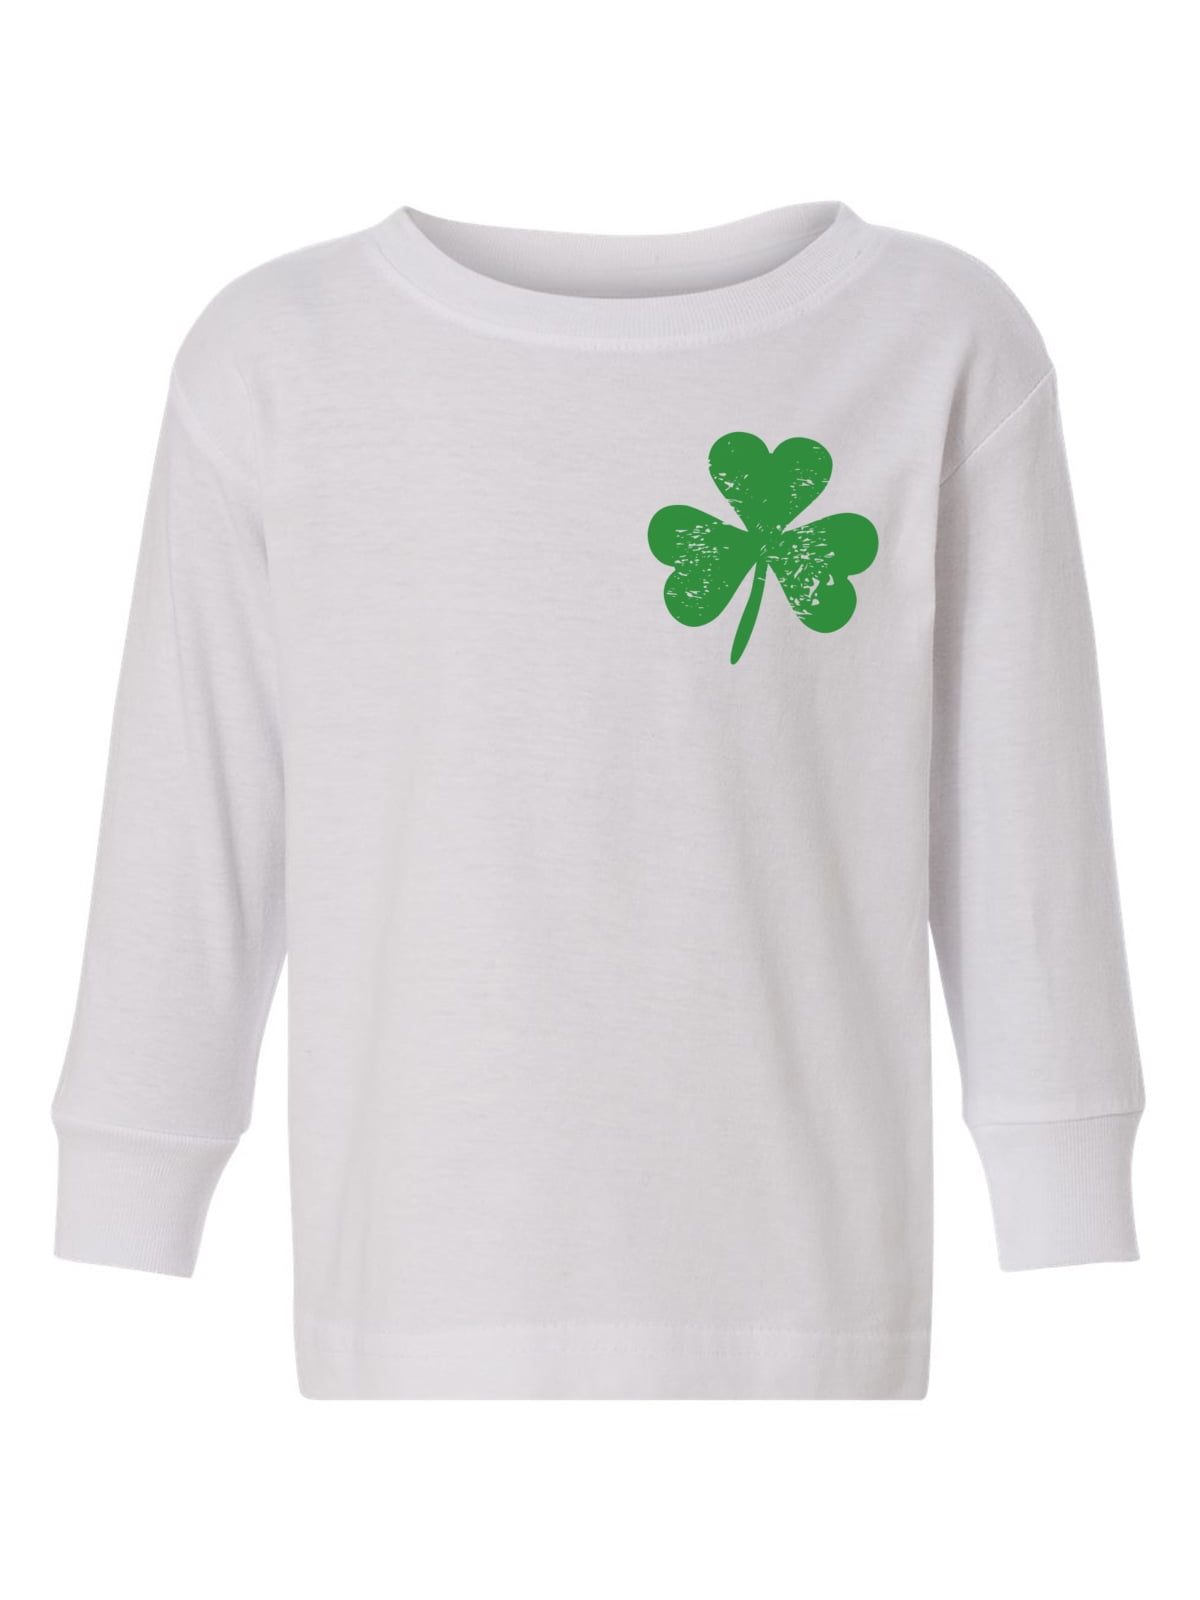 Girls Boys St Patrick's Day Shirt Long Sleeve Irish American Roots Tee for Kids Irish Day